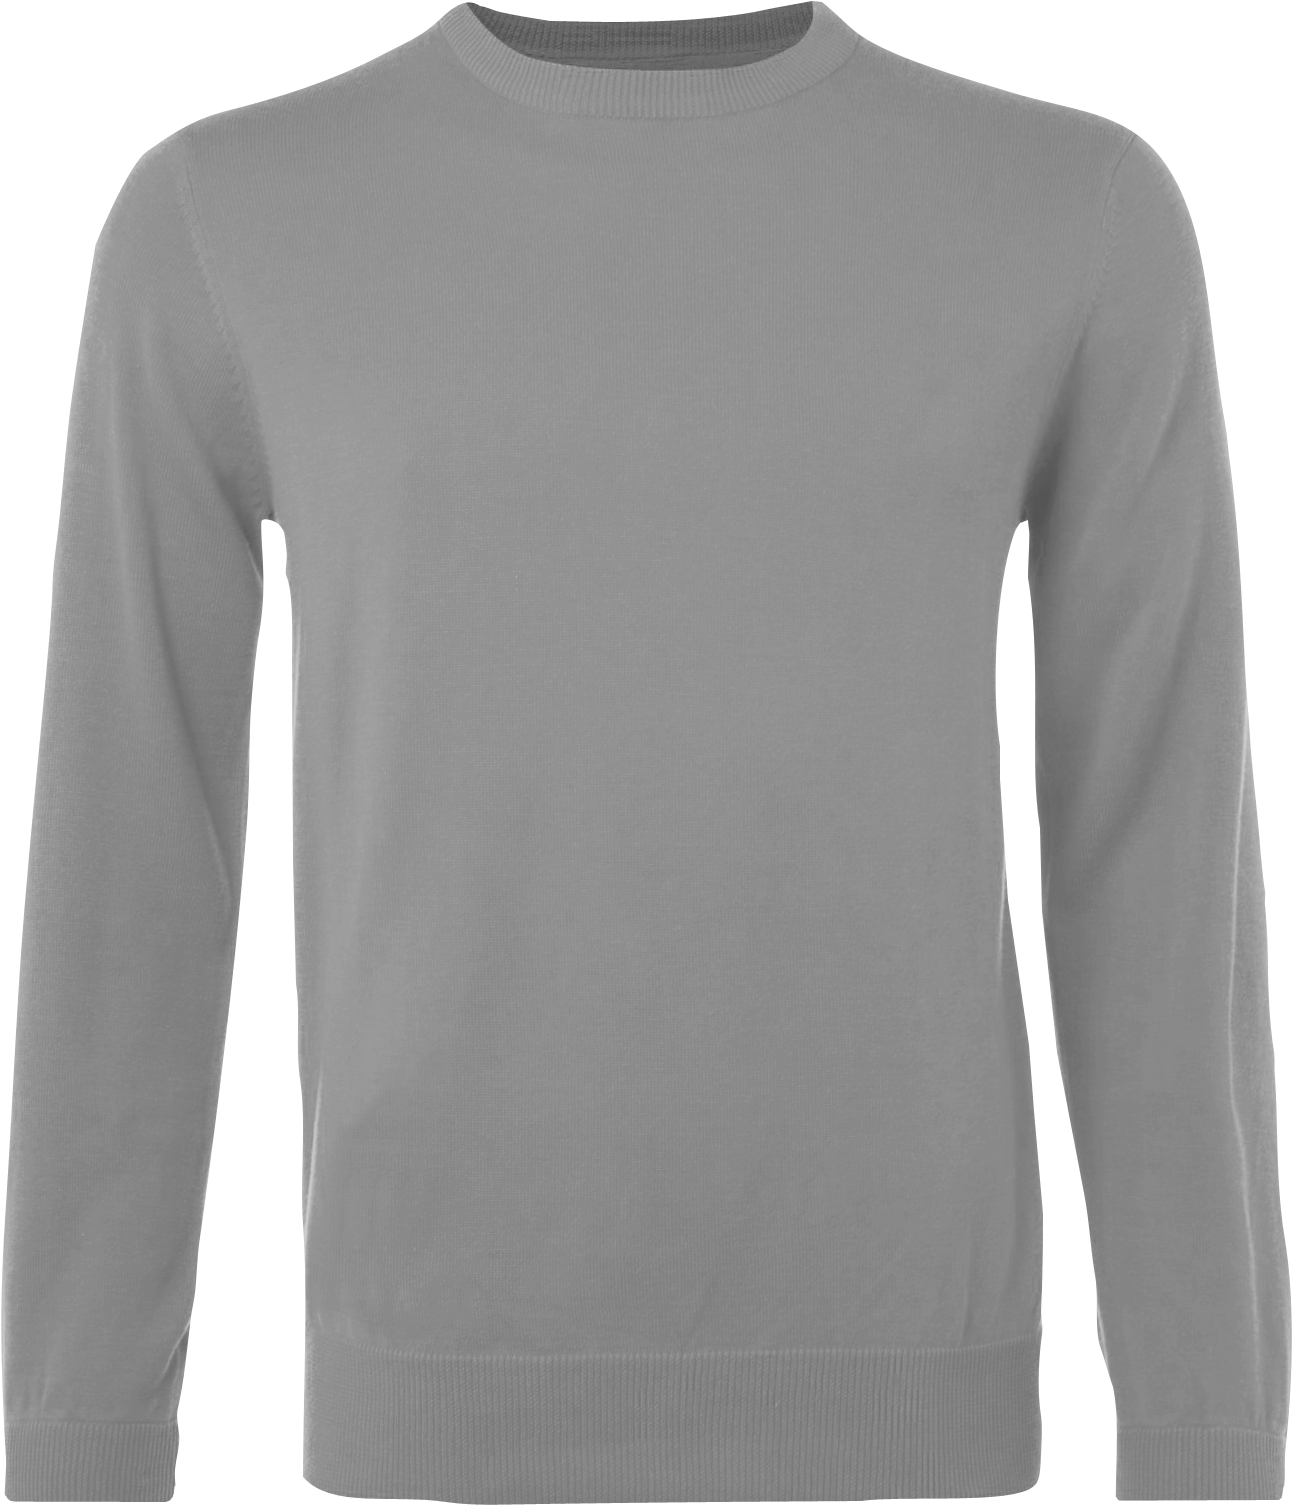 Ss Grey Jumper - Long-sleeved T-shirt (1391x1676), Png Download